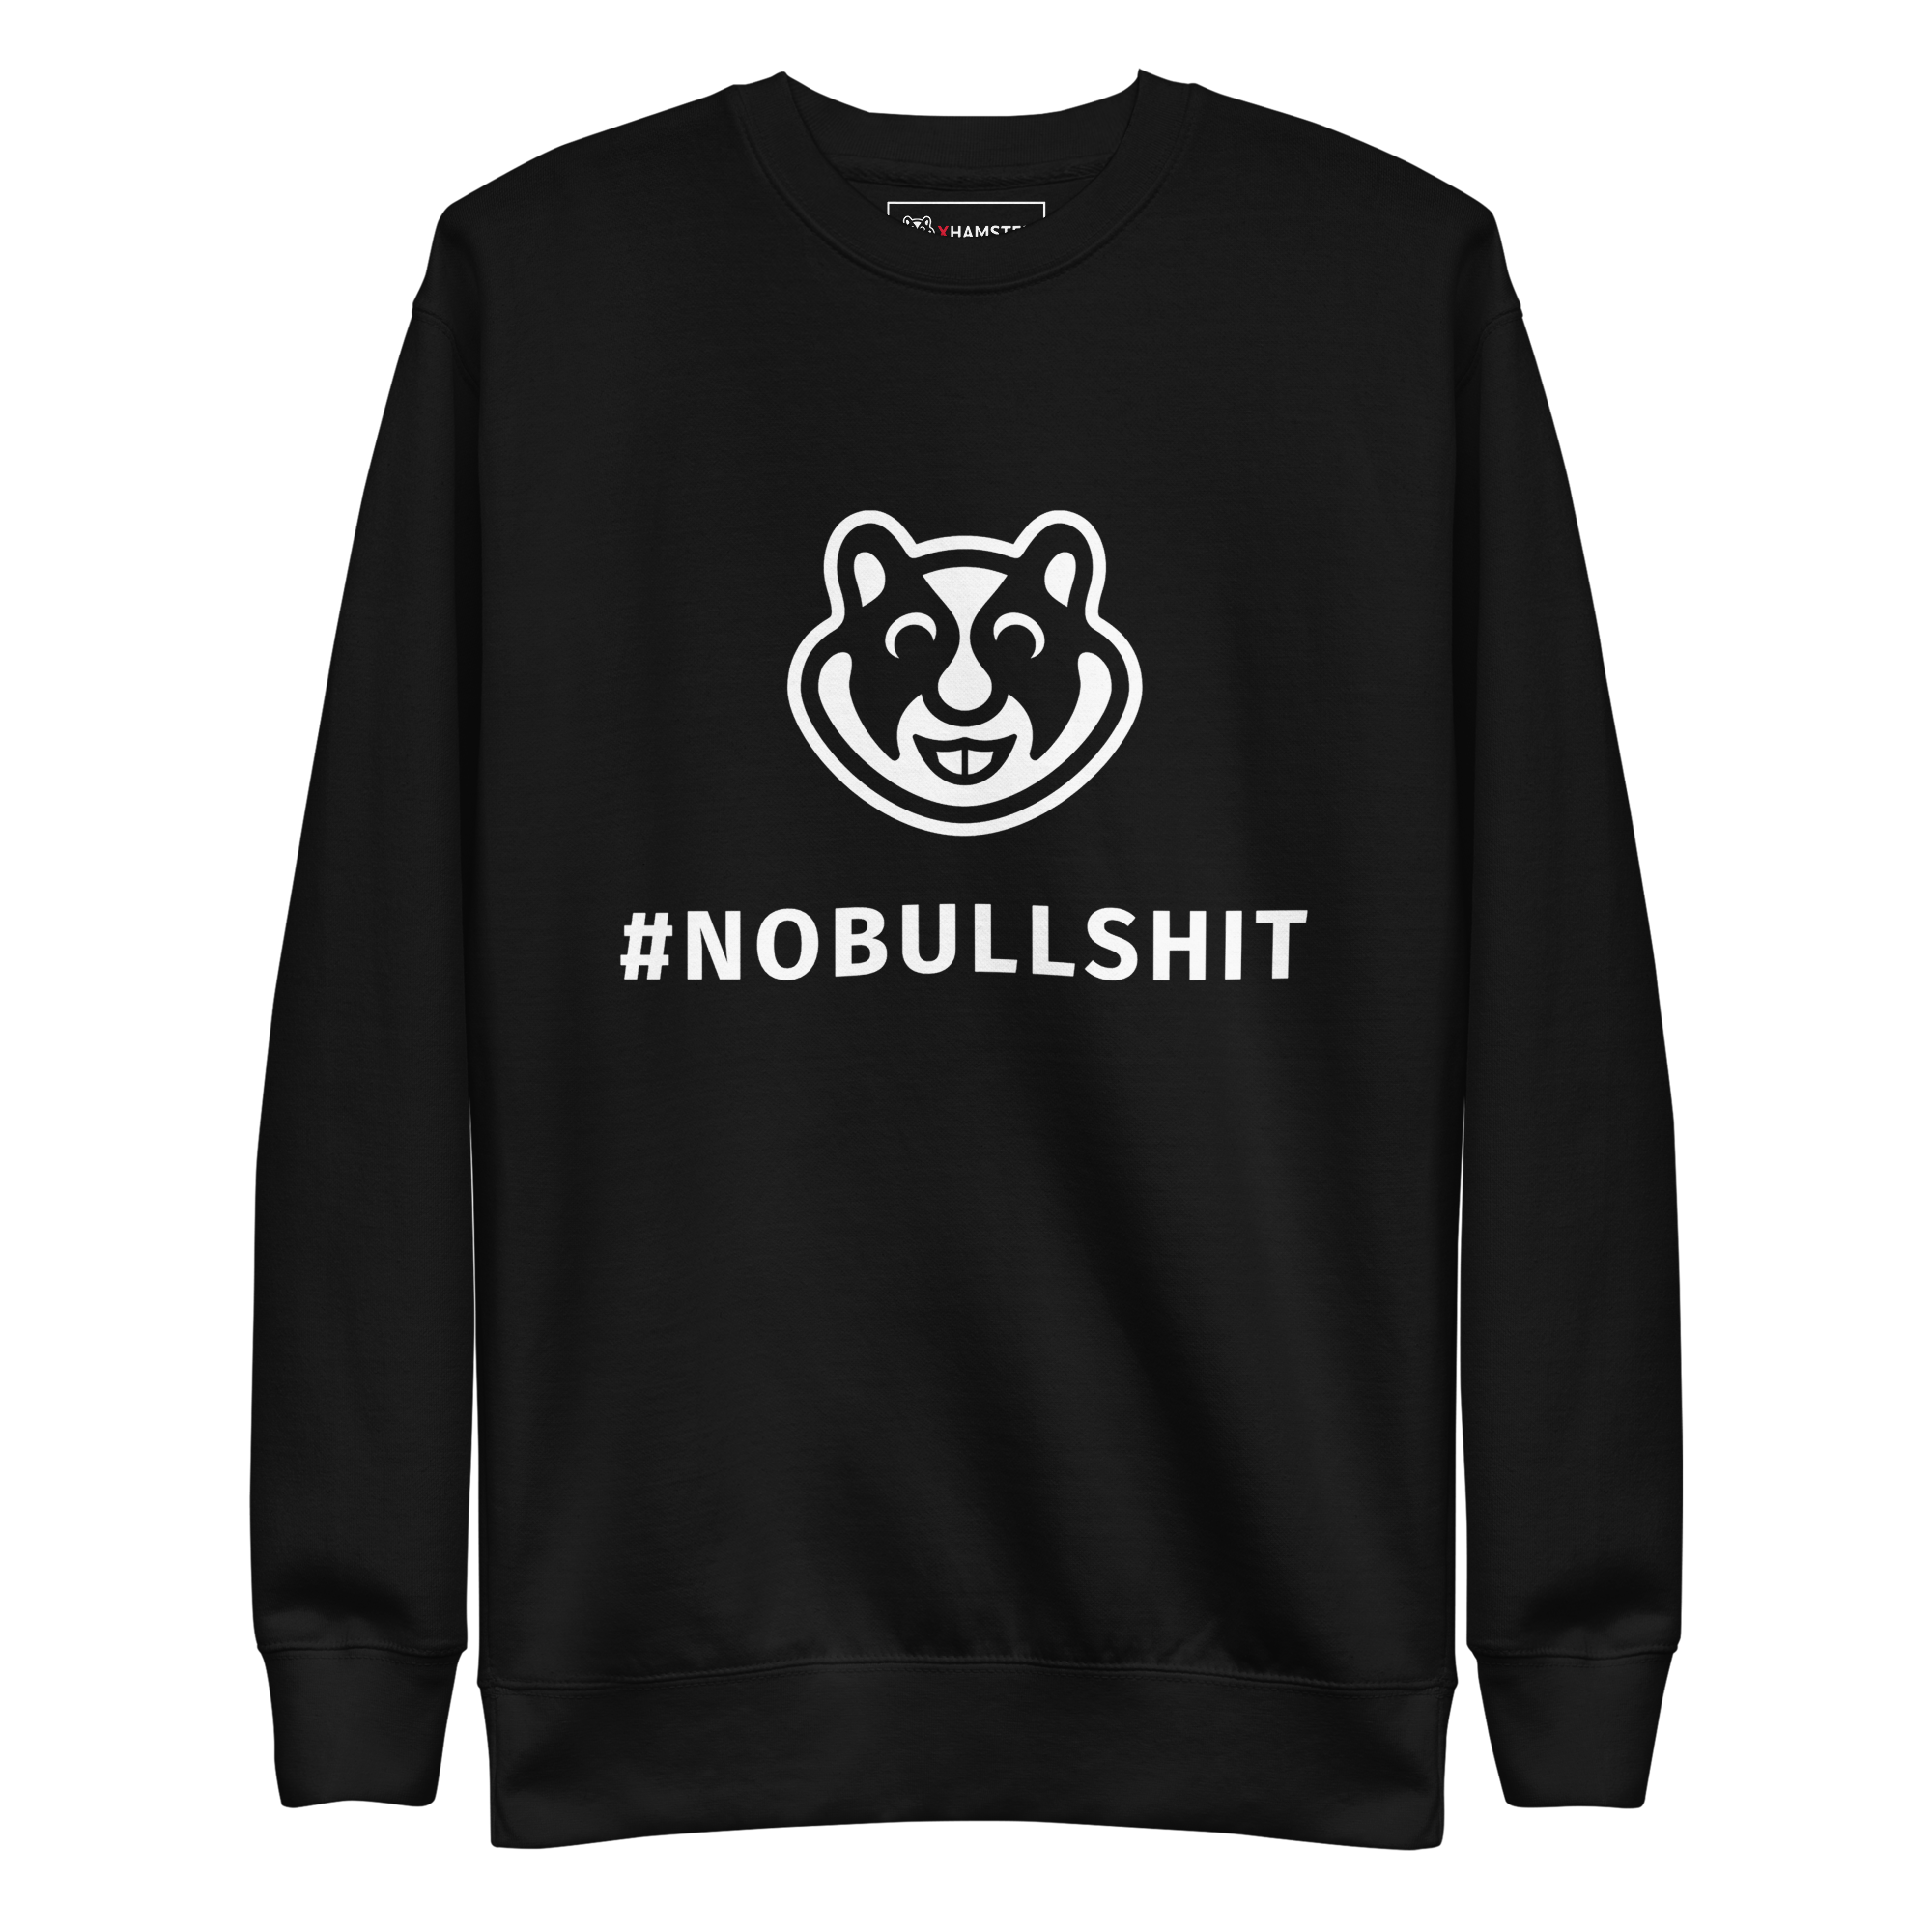 xHamster Unisex Sweatshirt #nobullshit Black/Charcoal Grey